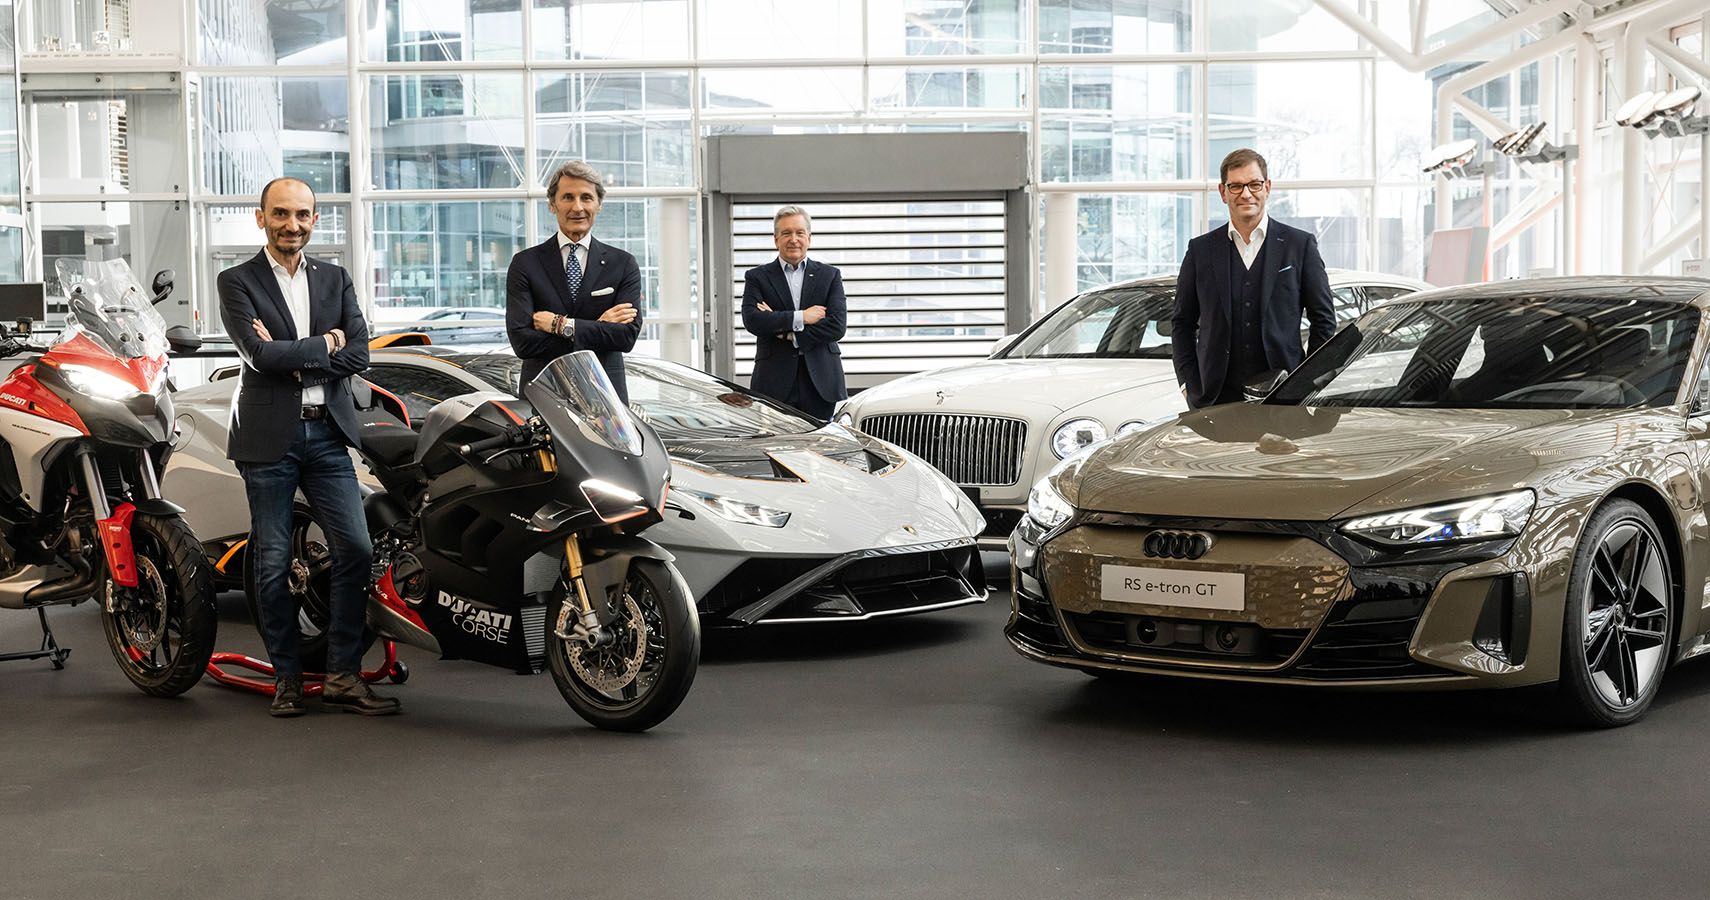 Ducati, Lamborghini, Bentley and Audi chief executives